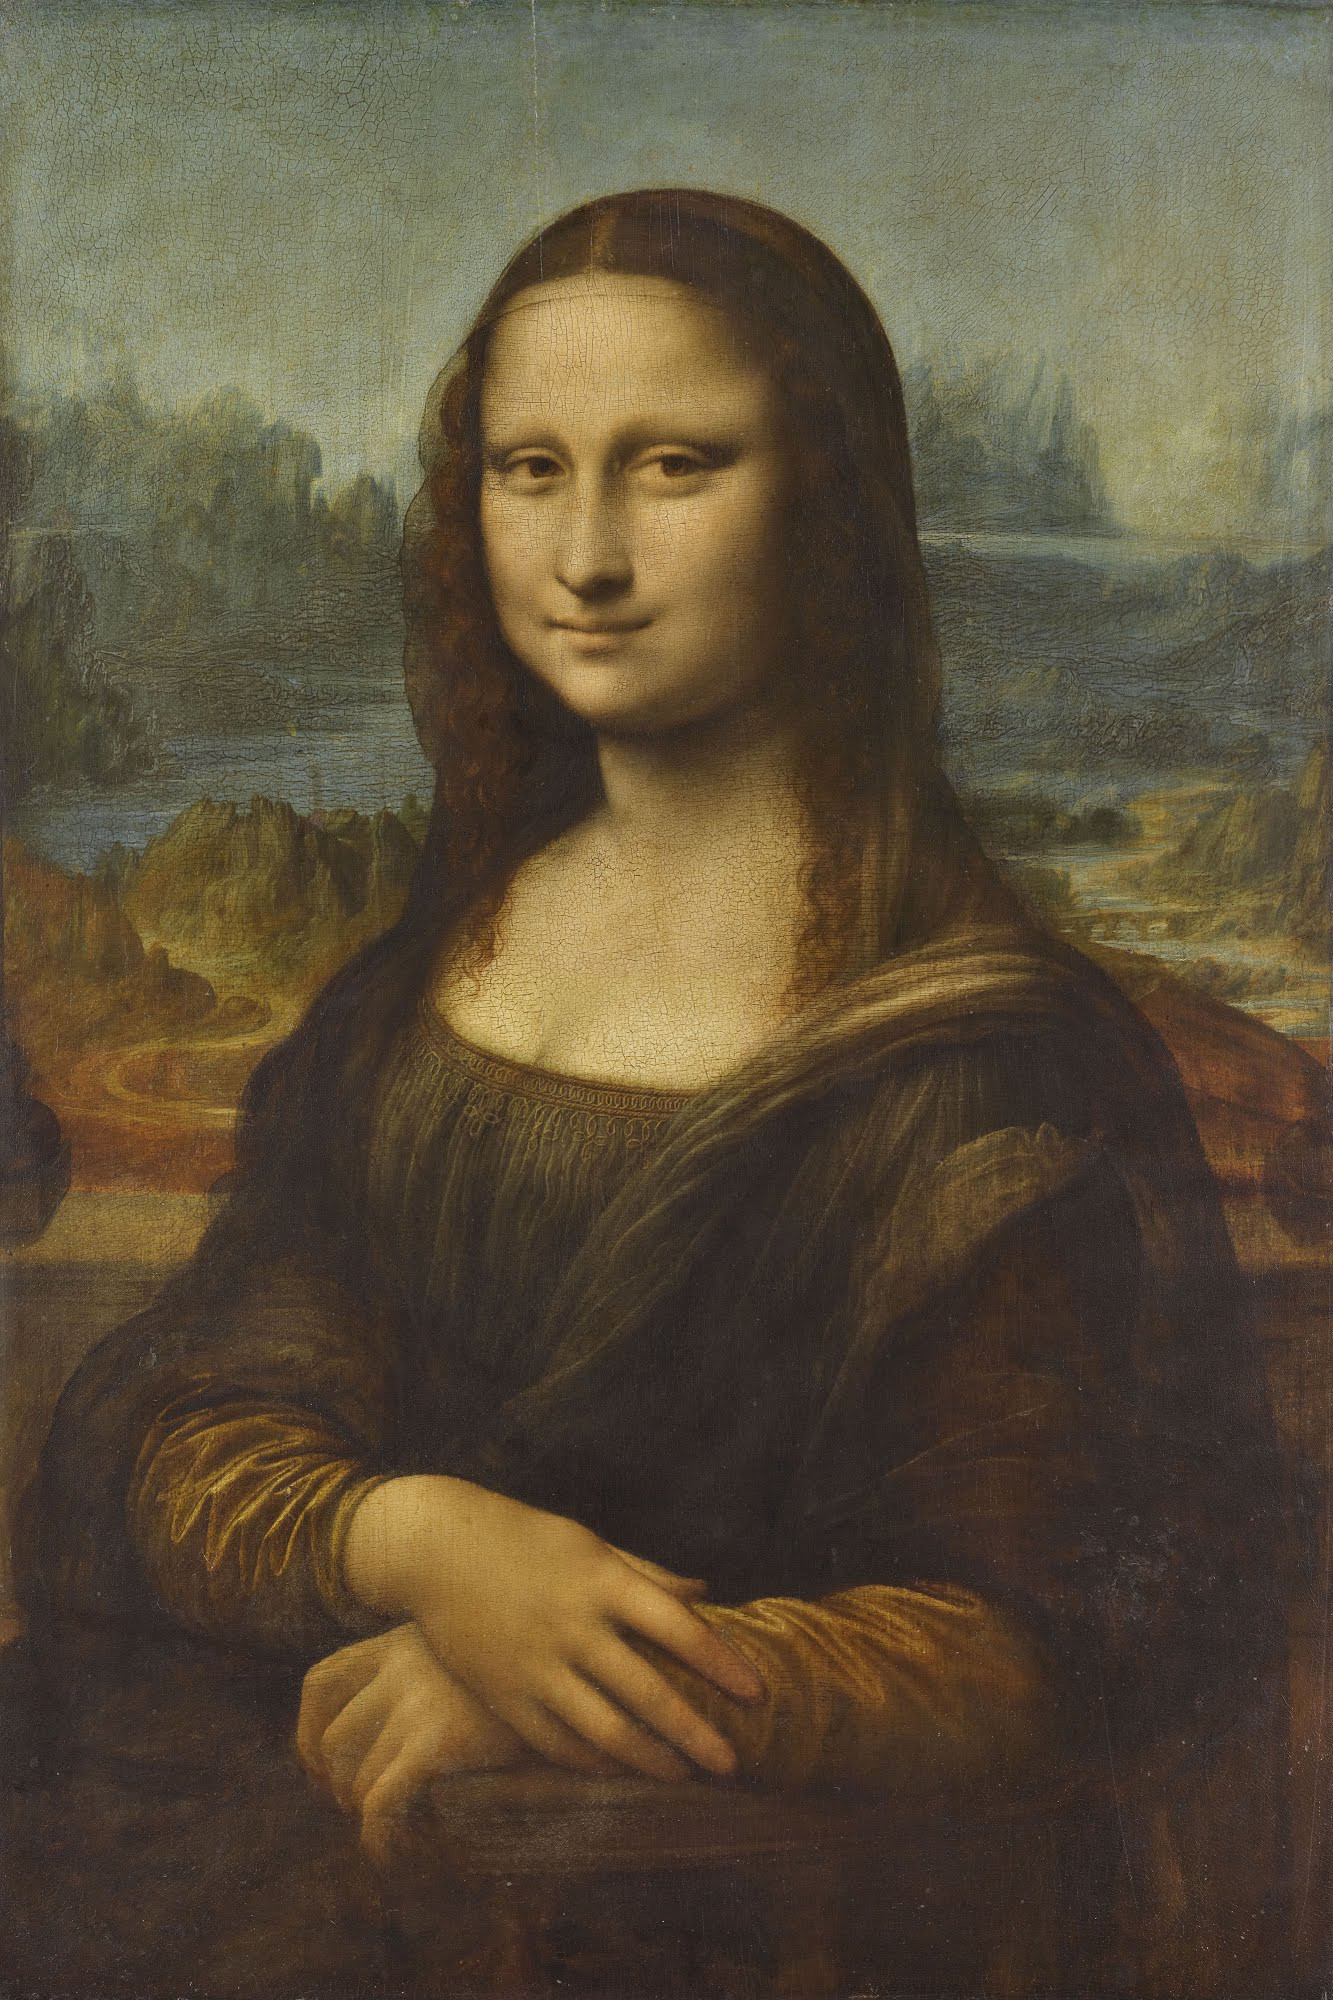 Portrait of Lisa Gherardini, wife of Francesco del Giocondo, known as "Monna Lisa, la Gioconda" or "Mona Lisa"